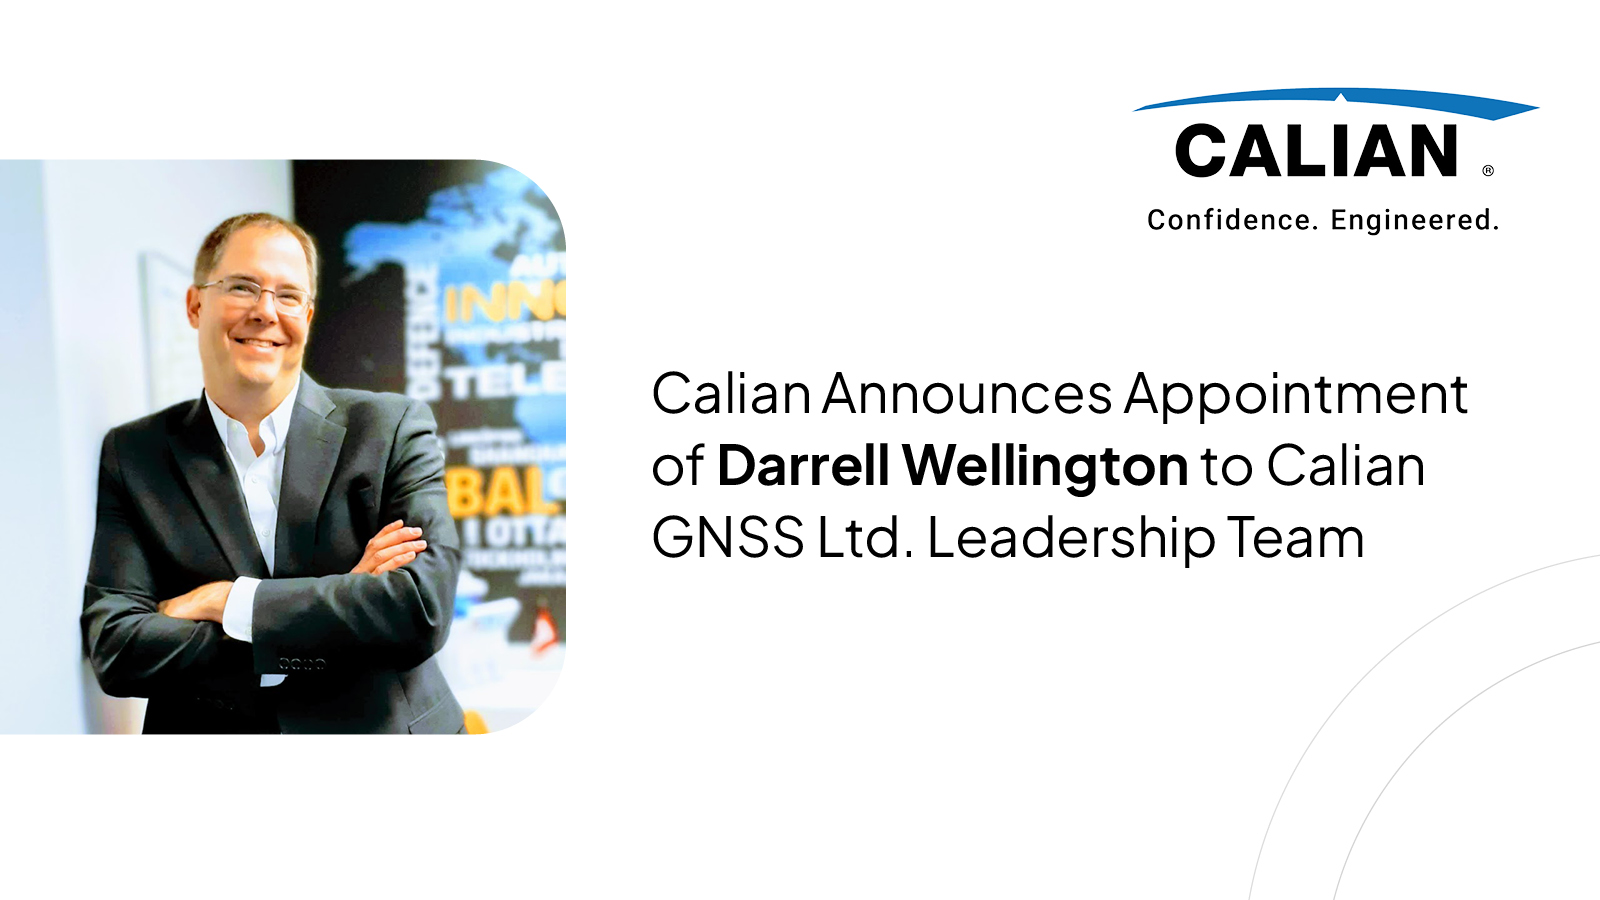 Calian Announces Appointment of Darrell Wellington to Calian Leadership Team